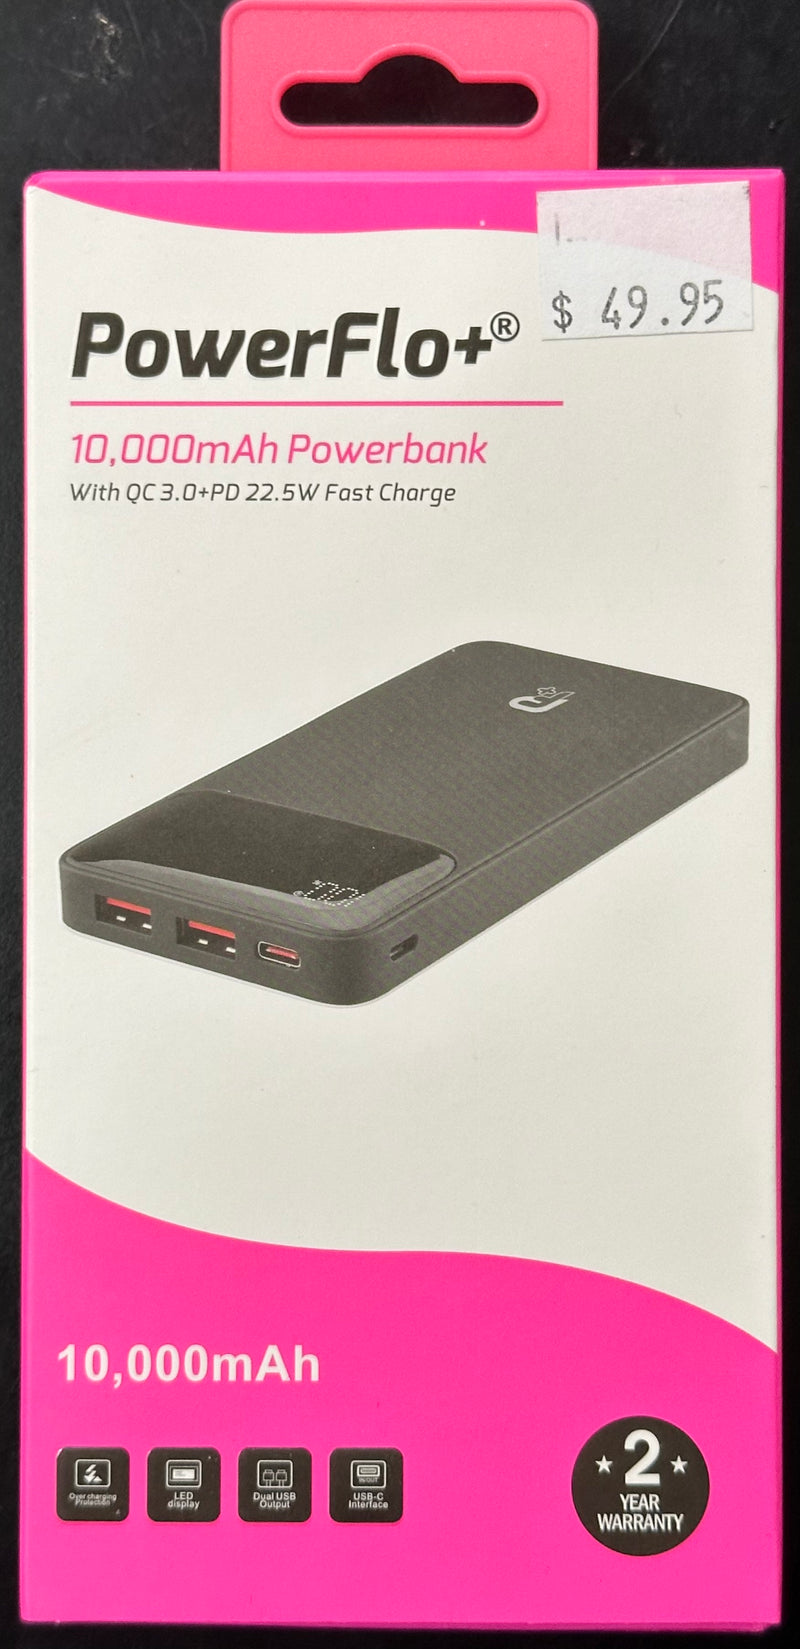 Powerflo+ 10000mAh Power bank